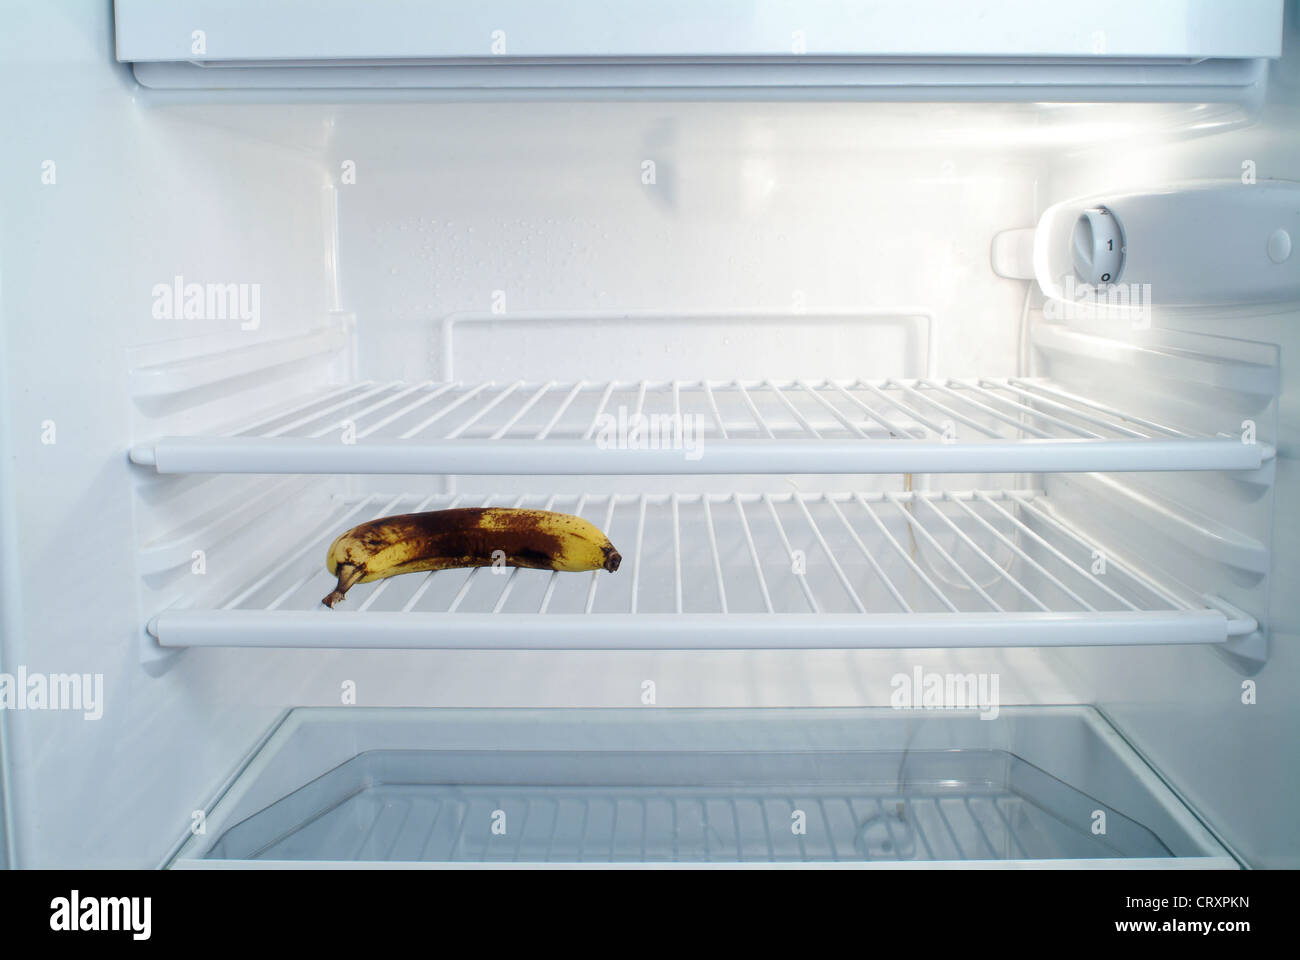 Quasi frigo vuoto Foto stock - Alamy